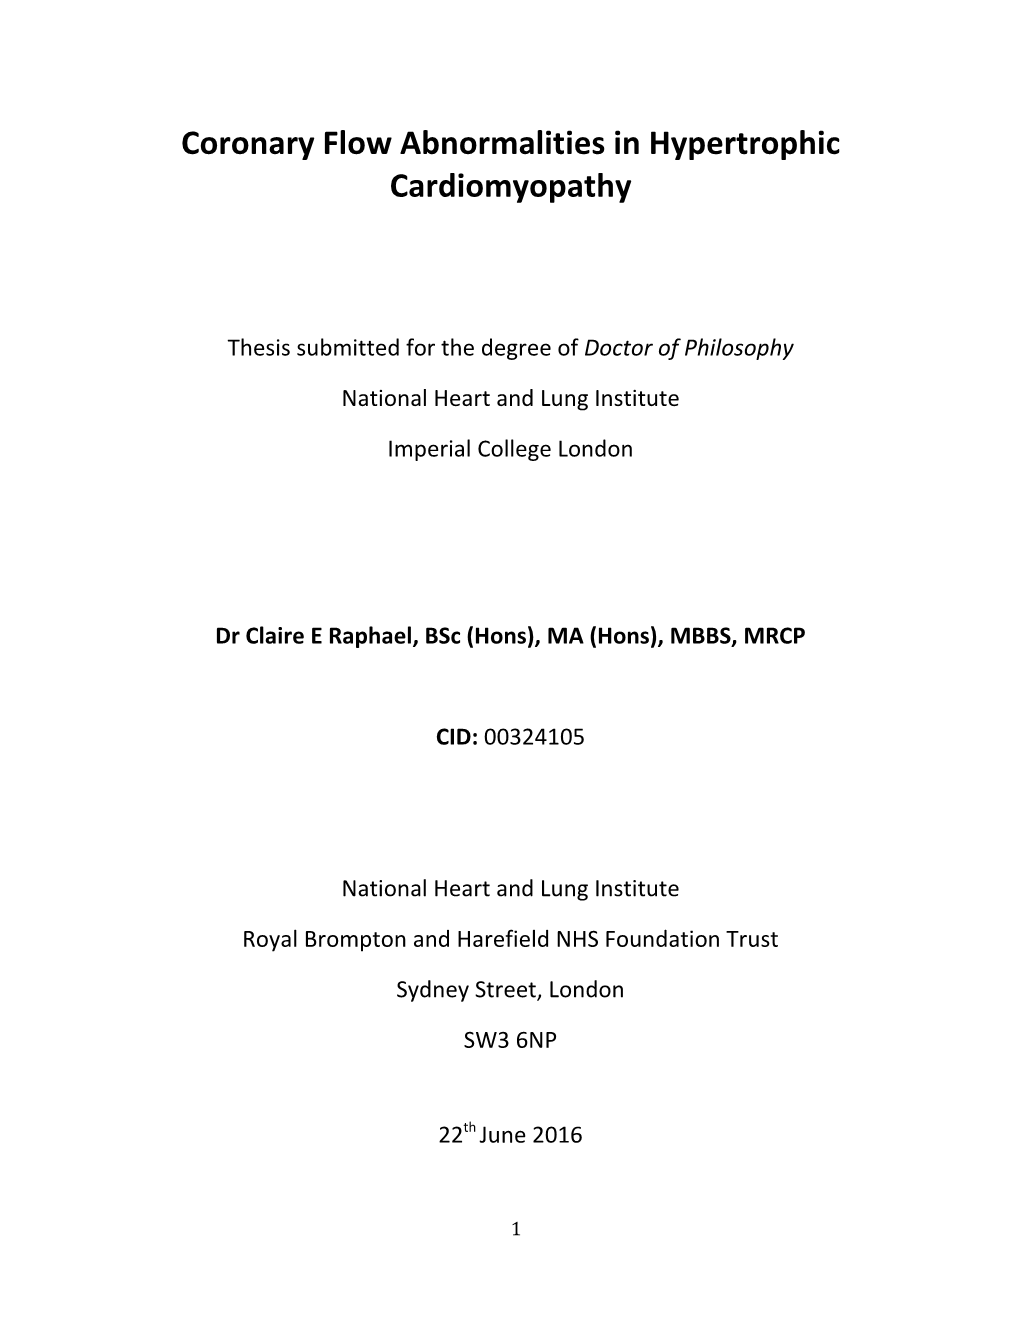 Coronary Flow Abnormalities in Hypertrophic Cardiomyopathy